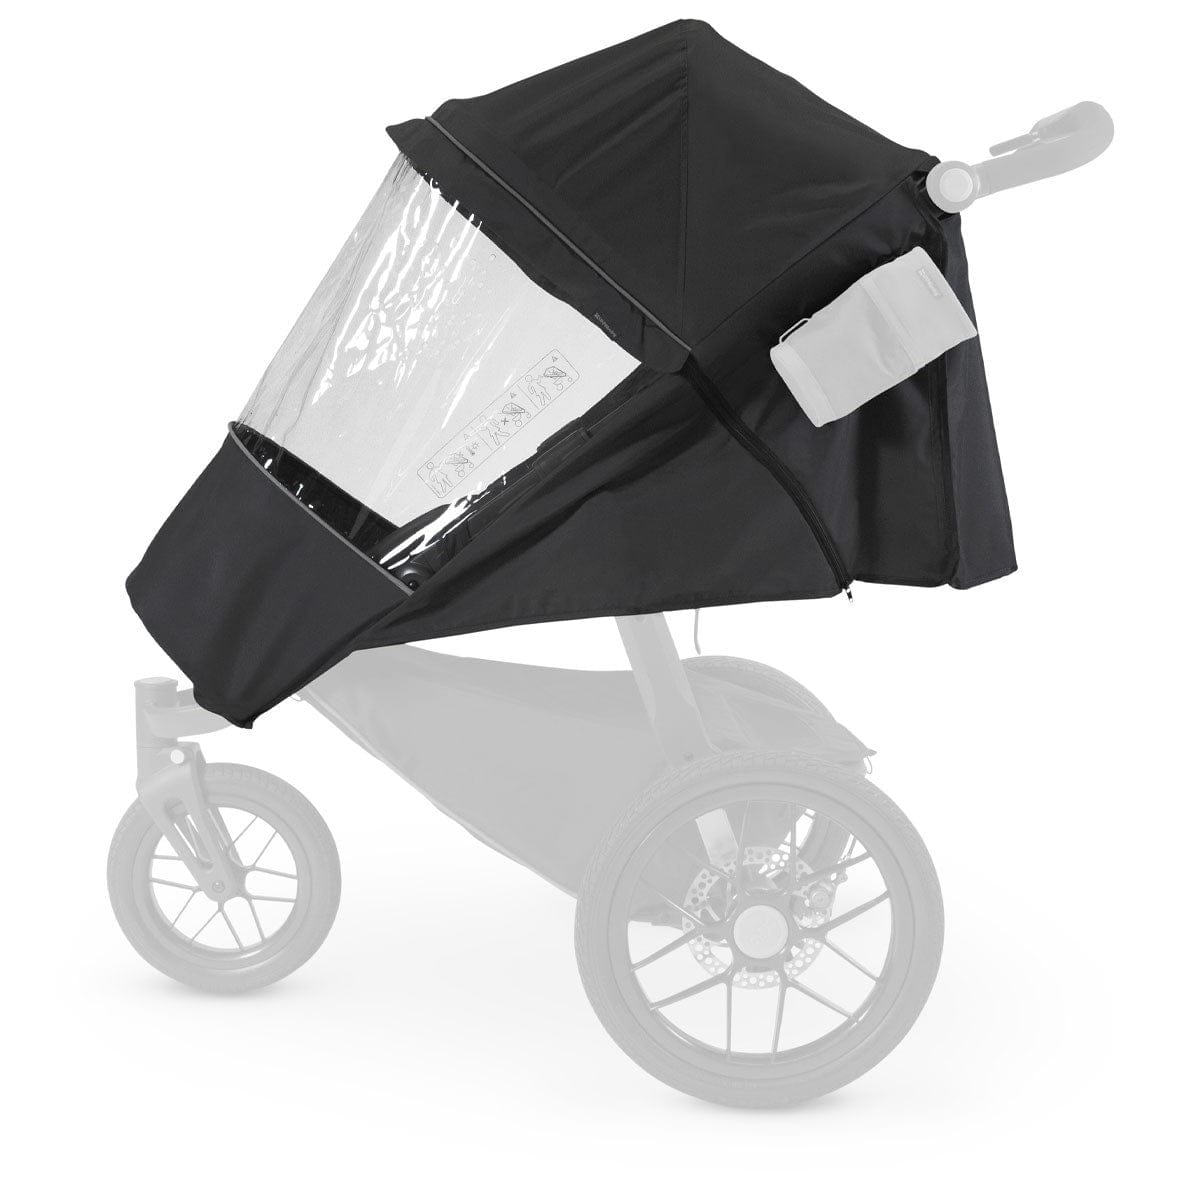 UPPAbaby stroller accessory UPPAbaby RIDGE Performance Rain Shield